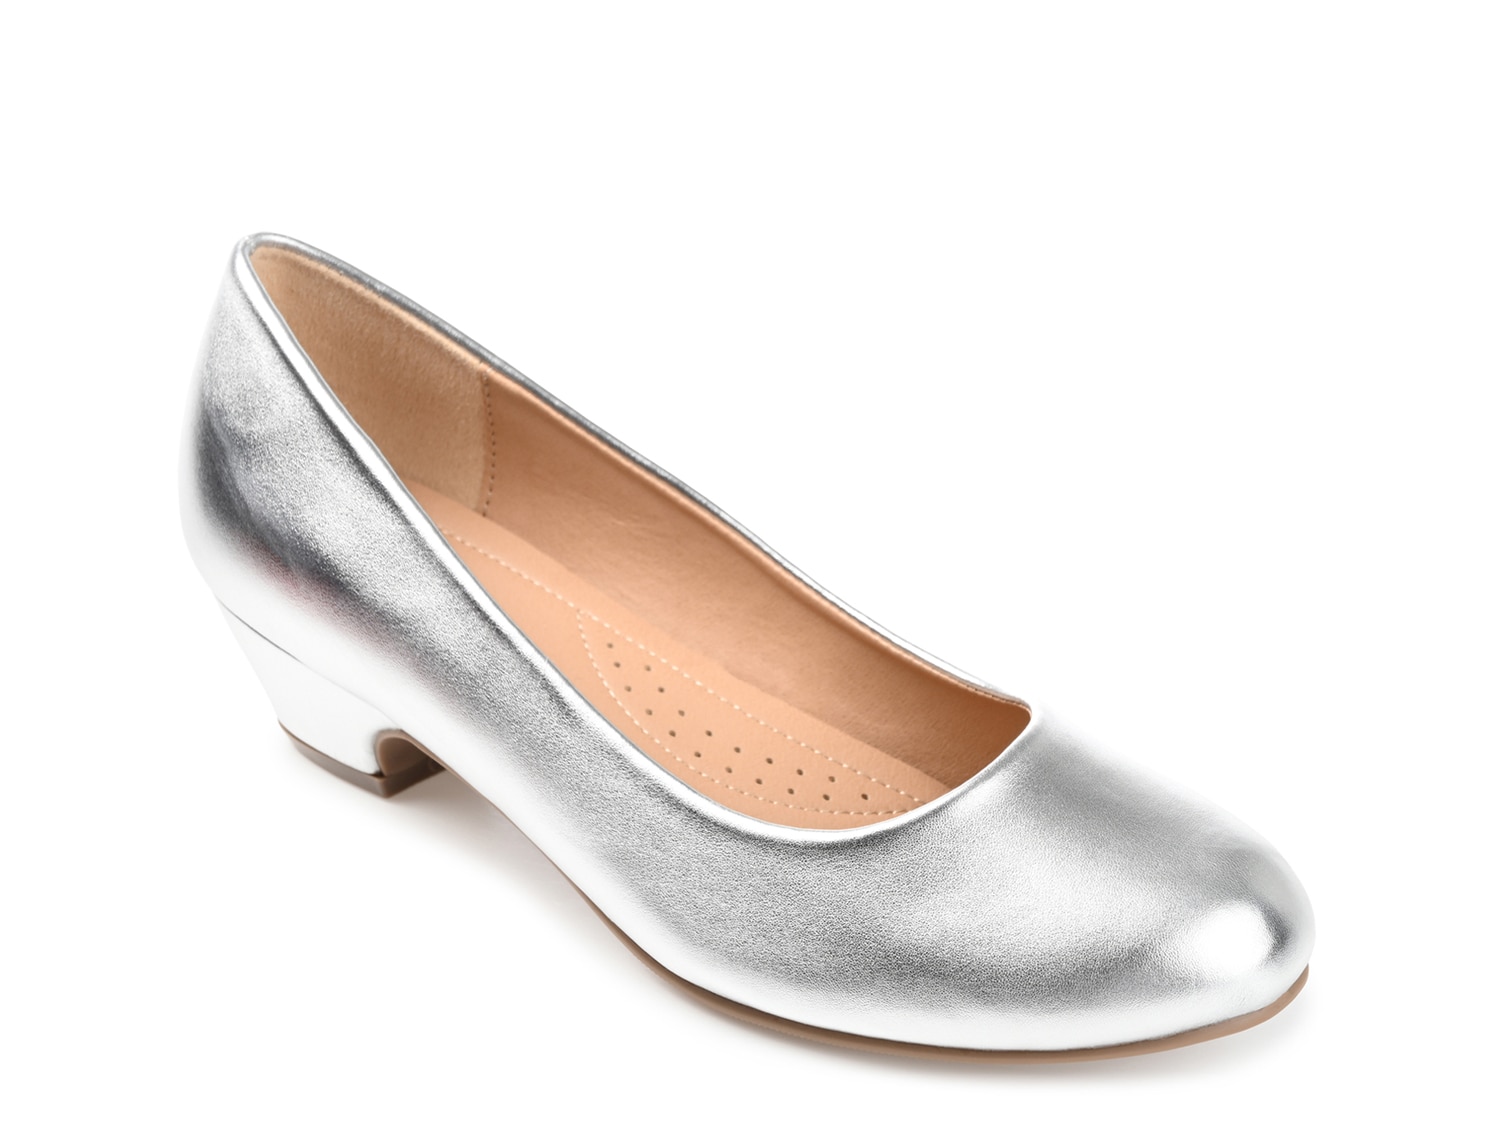 dsw dress shoes silver